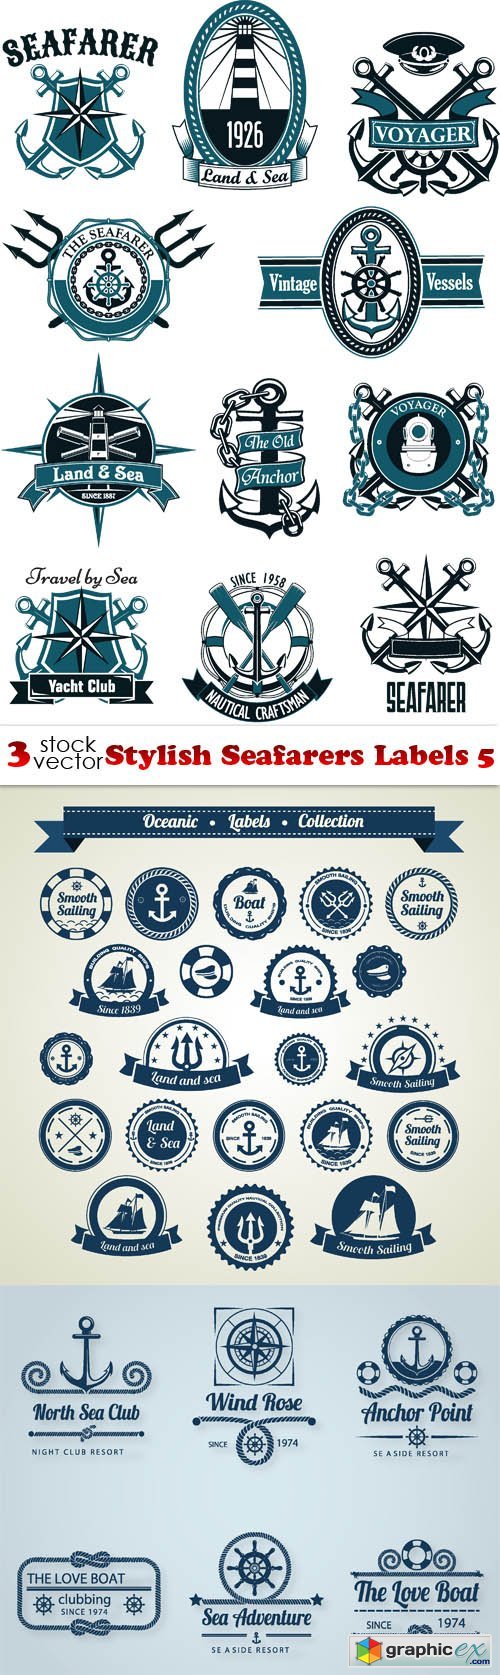 Stylish Seafarers Labels 5